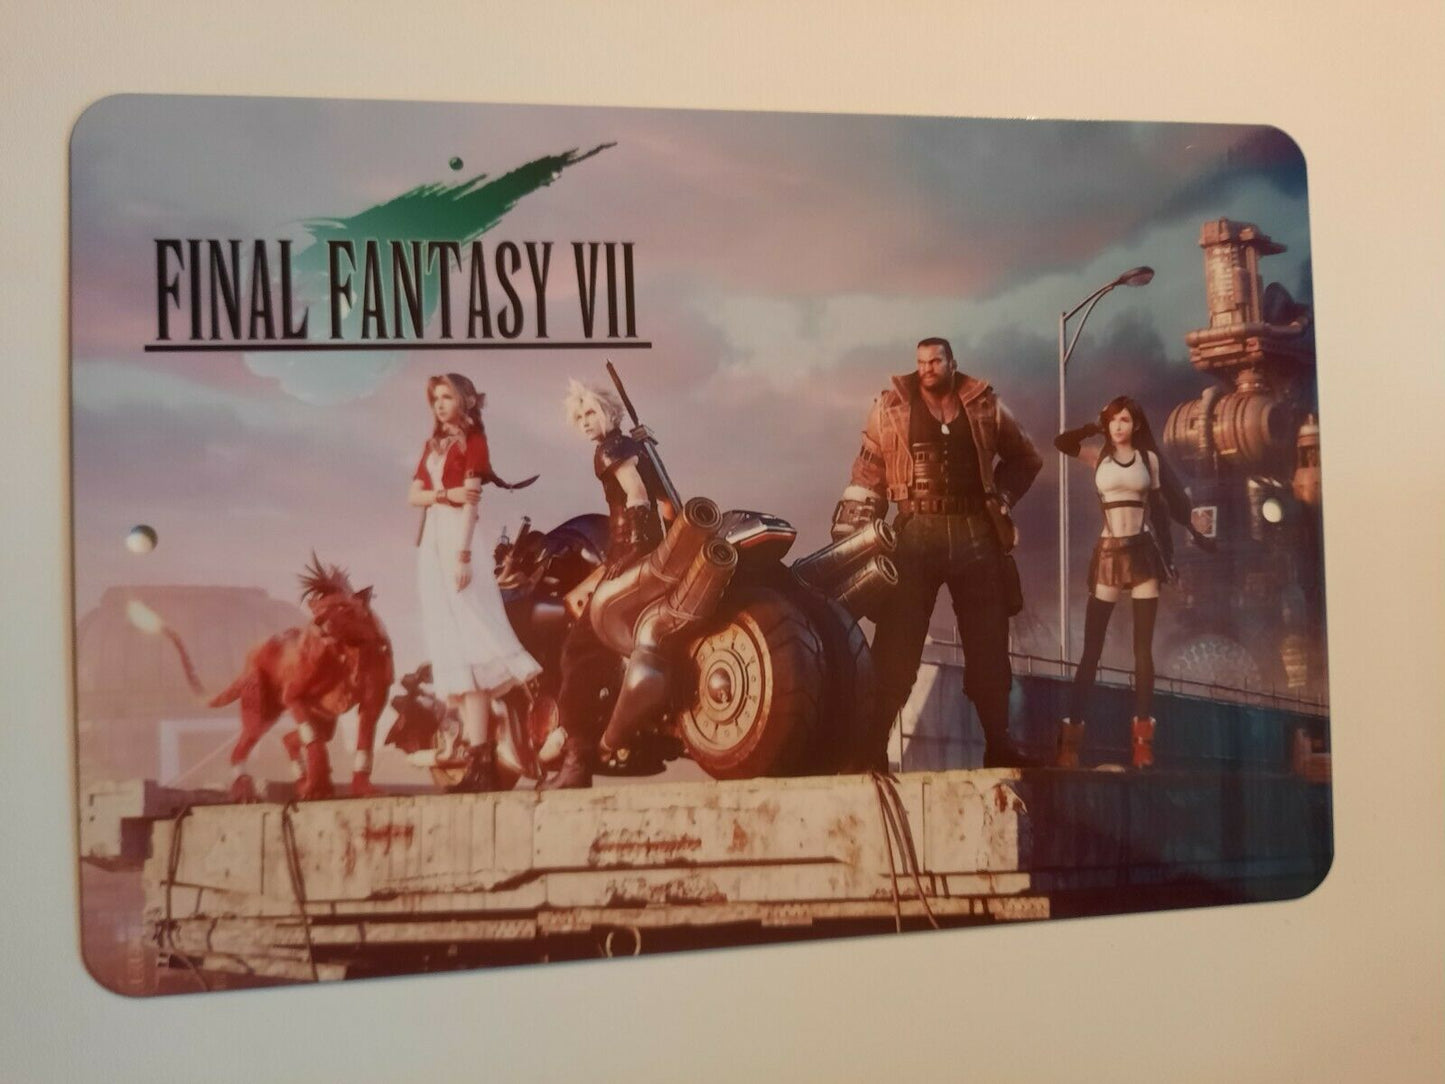 FFVII Final Fantasy 7 Video Game 8x12 Metal Wall Sign Arcade